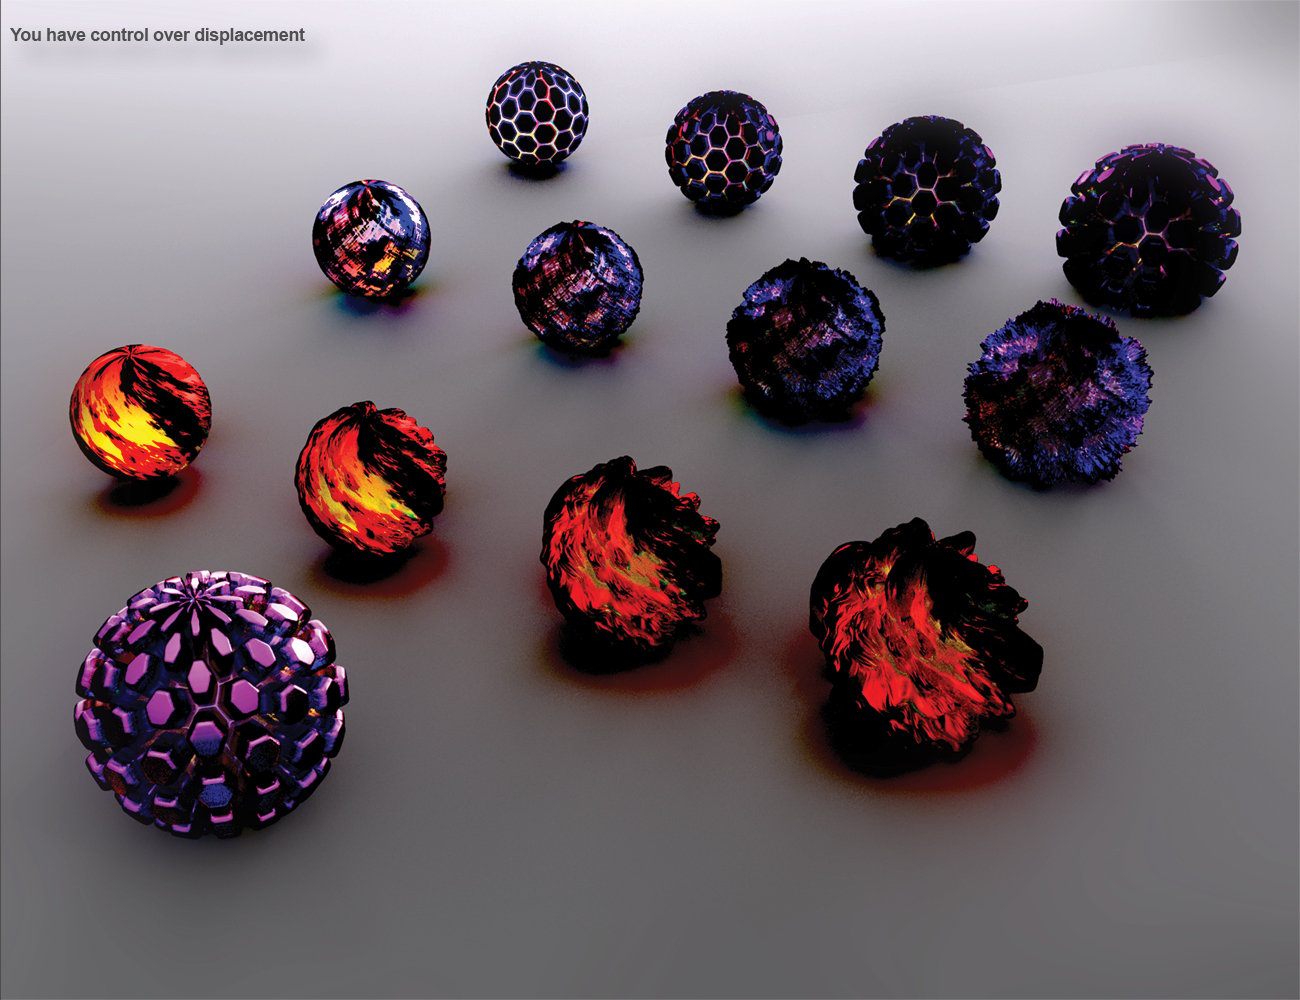 Dark Matter Shaders by: Marshian, 3D Models by Daz 3D